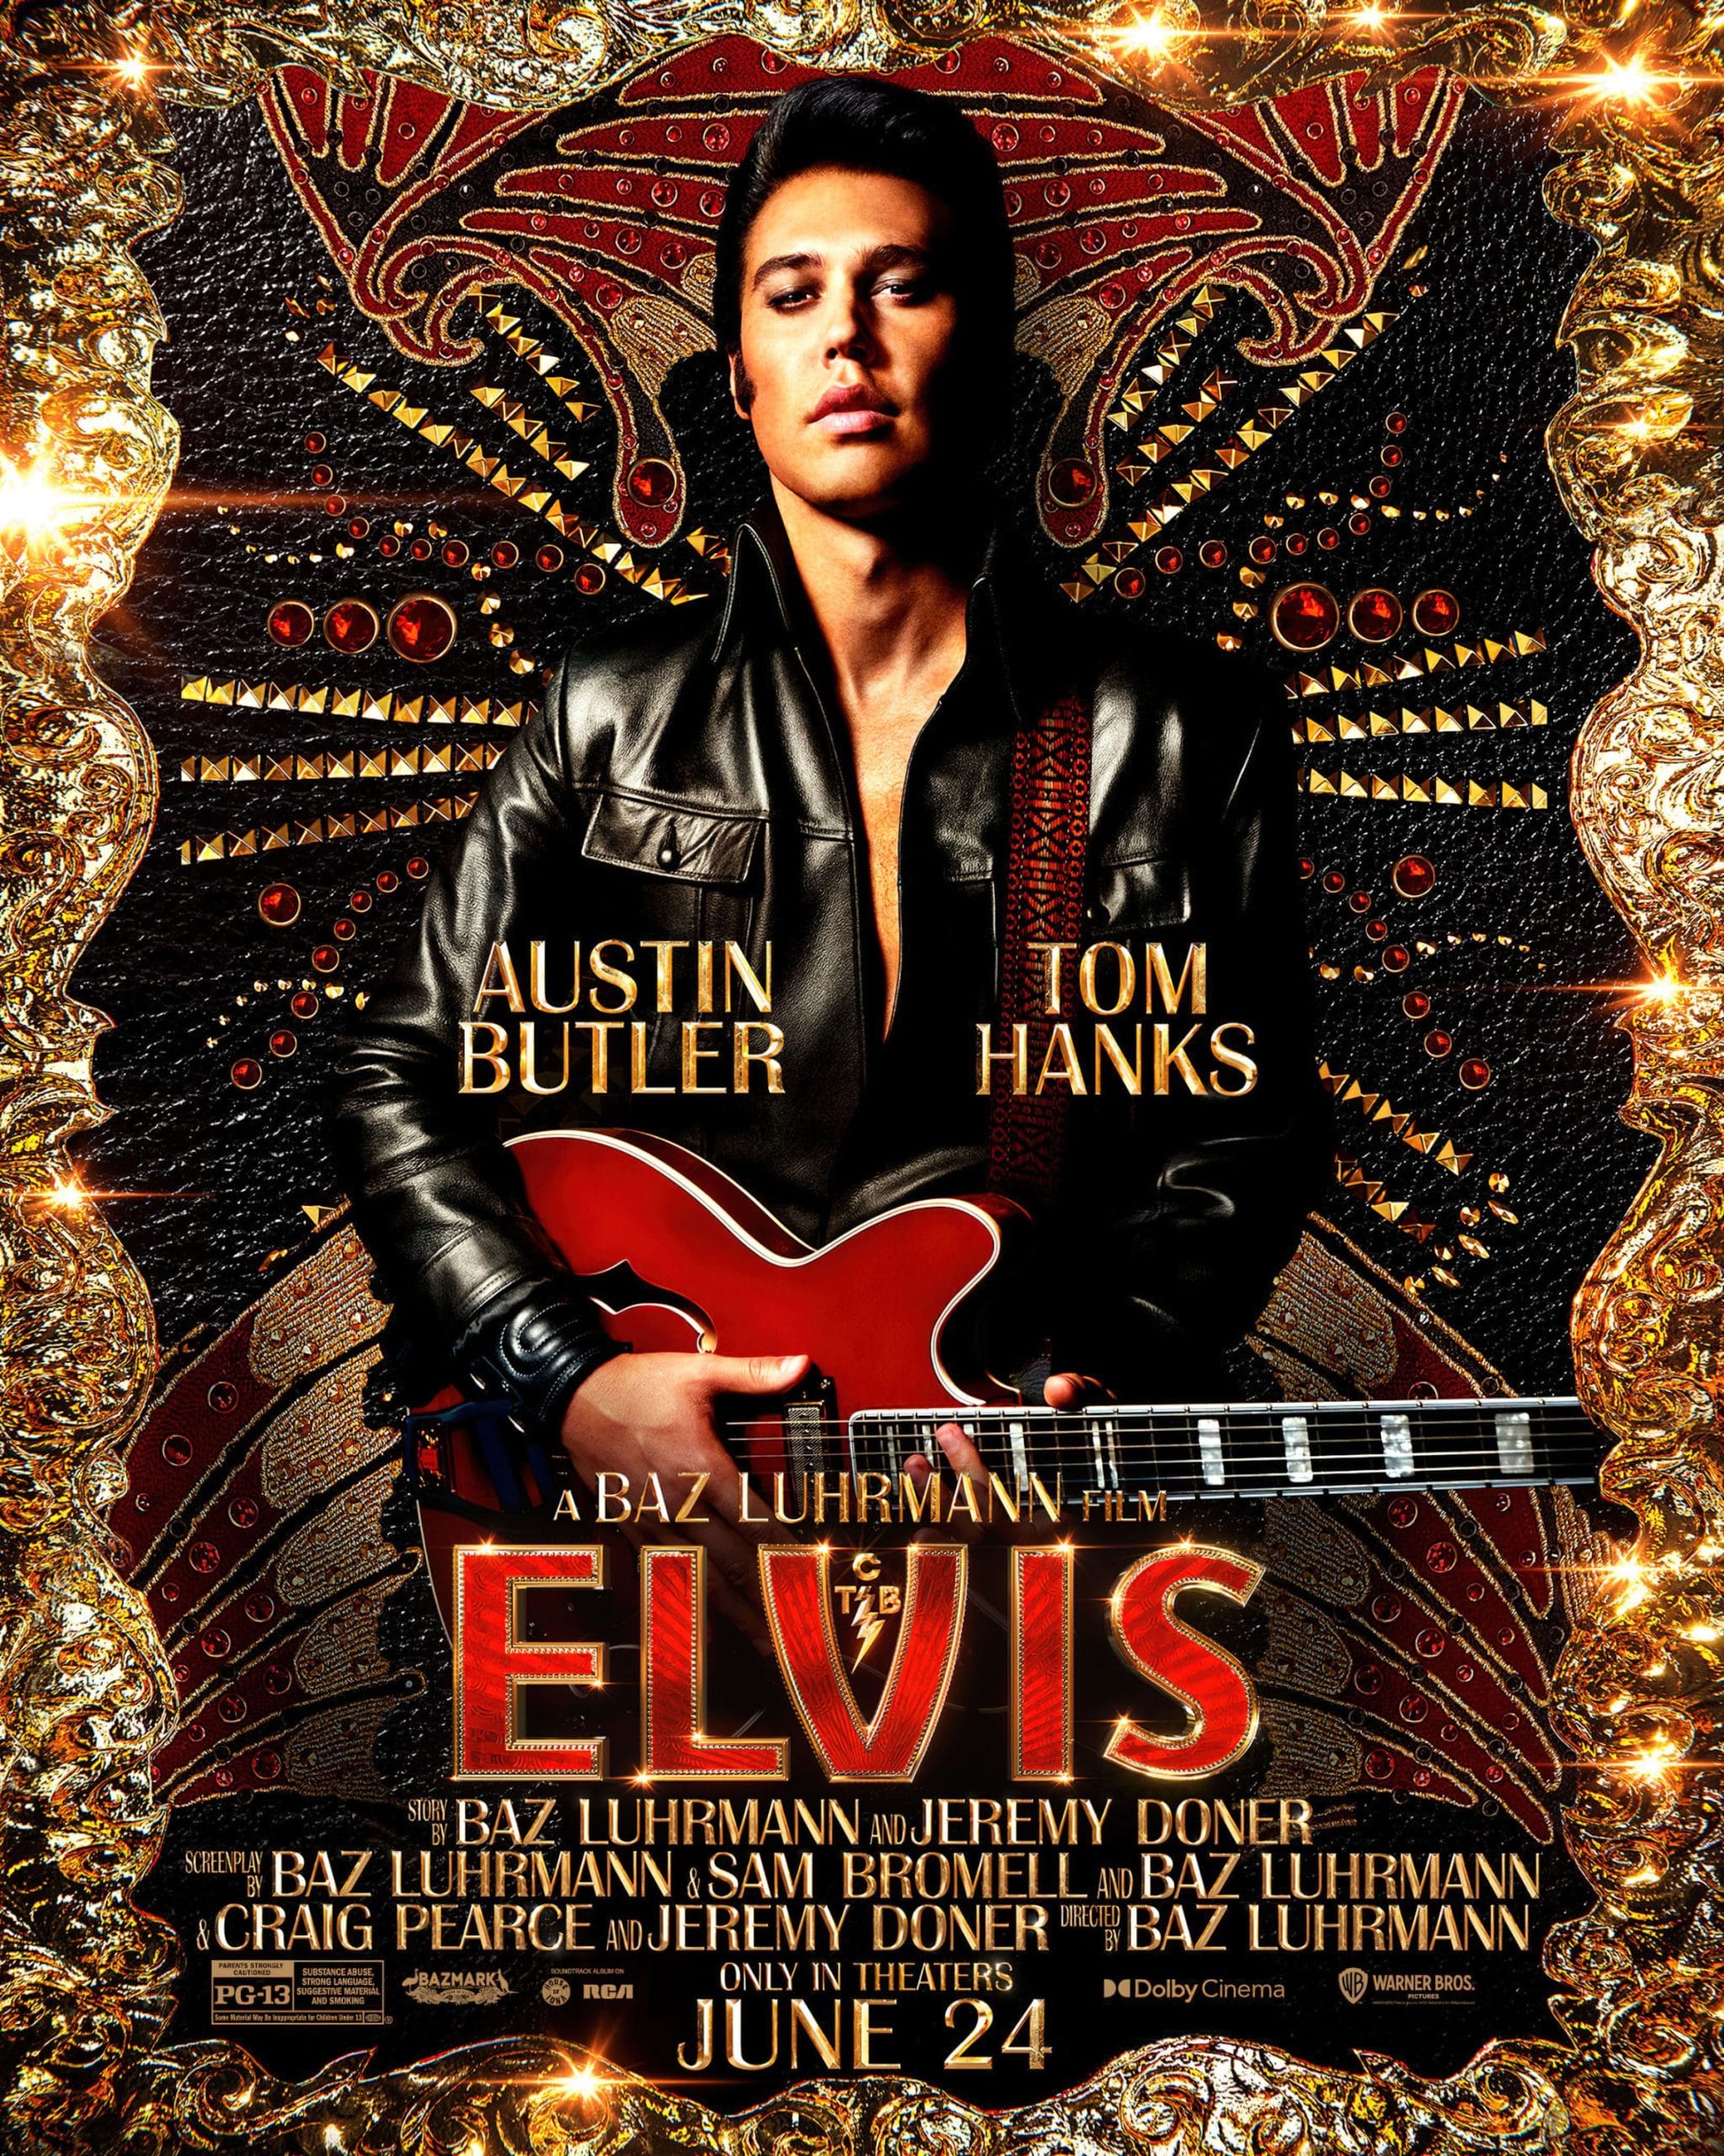 ELVIS, US poster, Austin Butler as Elvis Presley, 2022